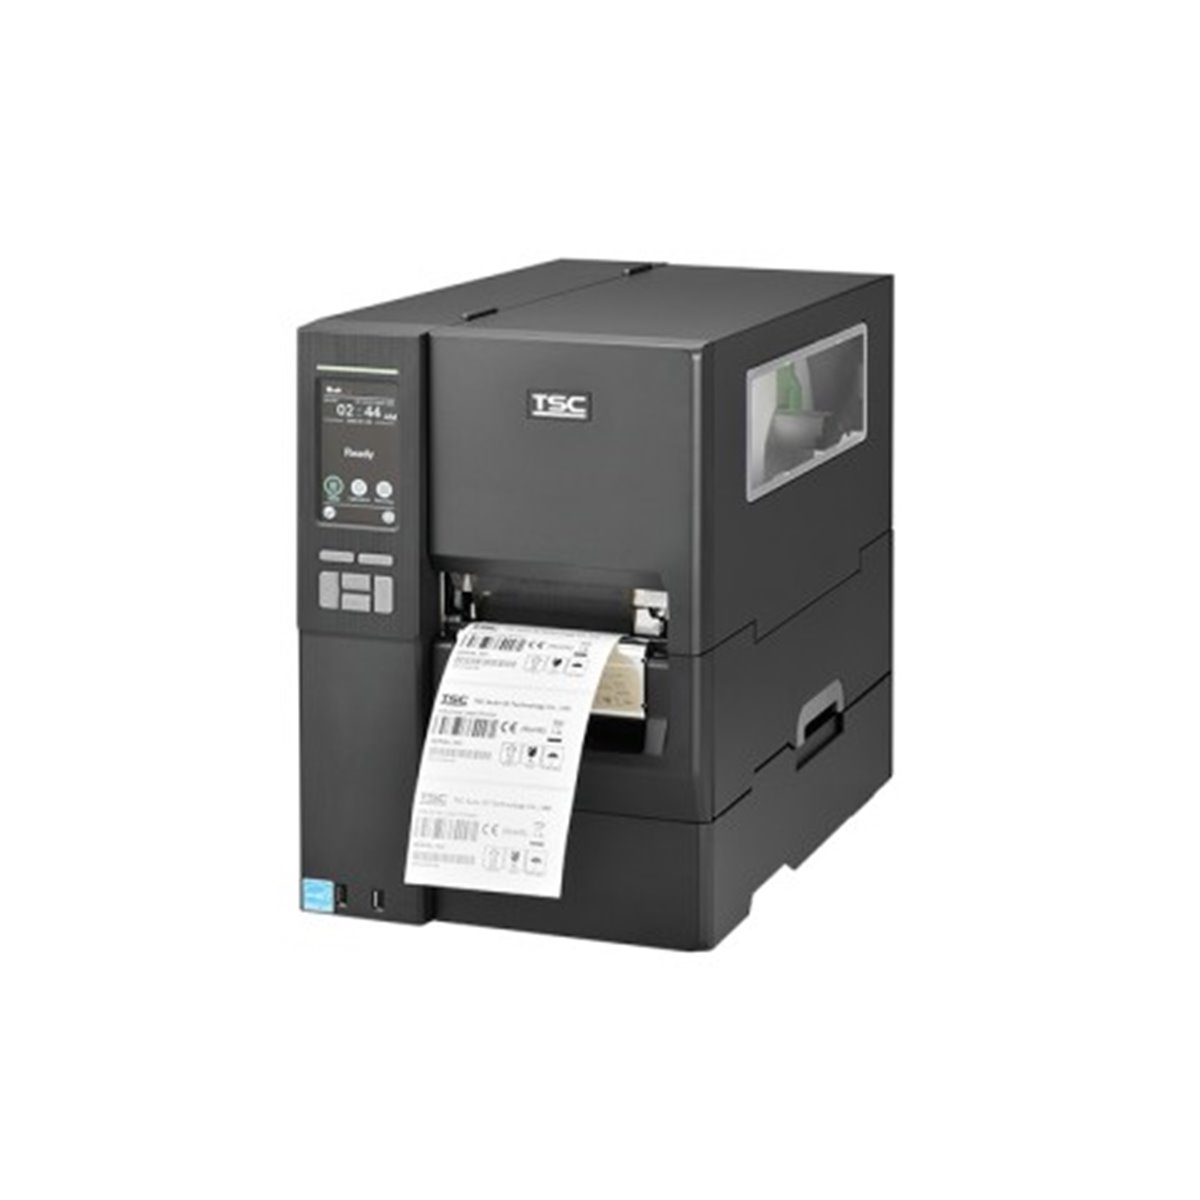 TSC MH341P 12 Punkte/mm 300dpi Rewinder Disp. RTC USB RS232 Ethernet - Label Printer - Label Printer